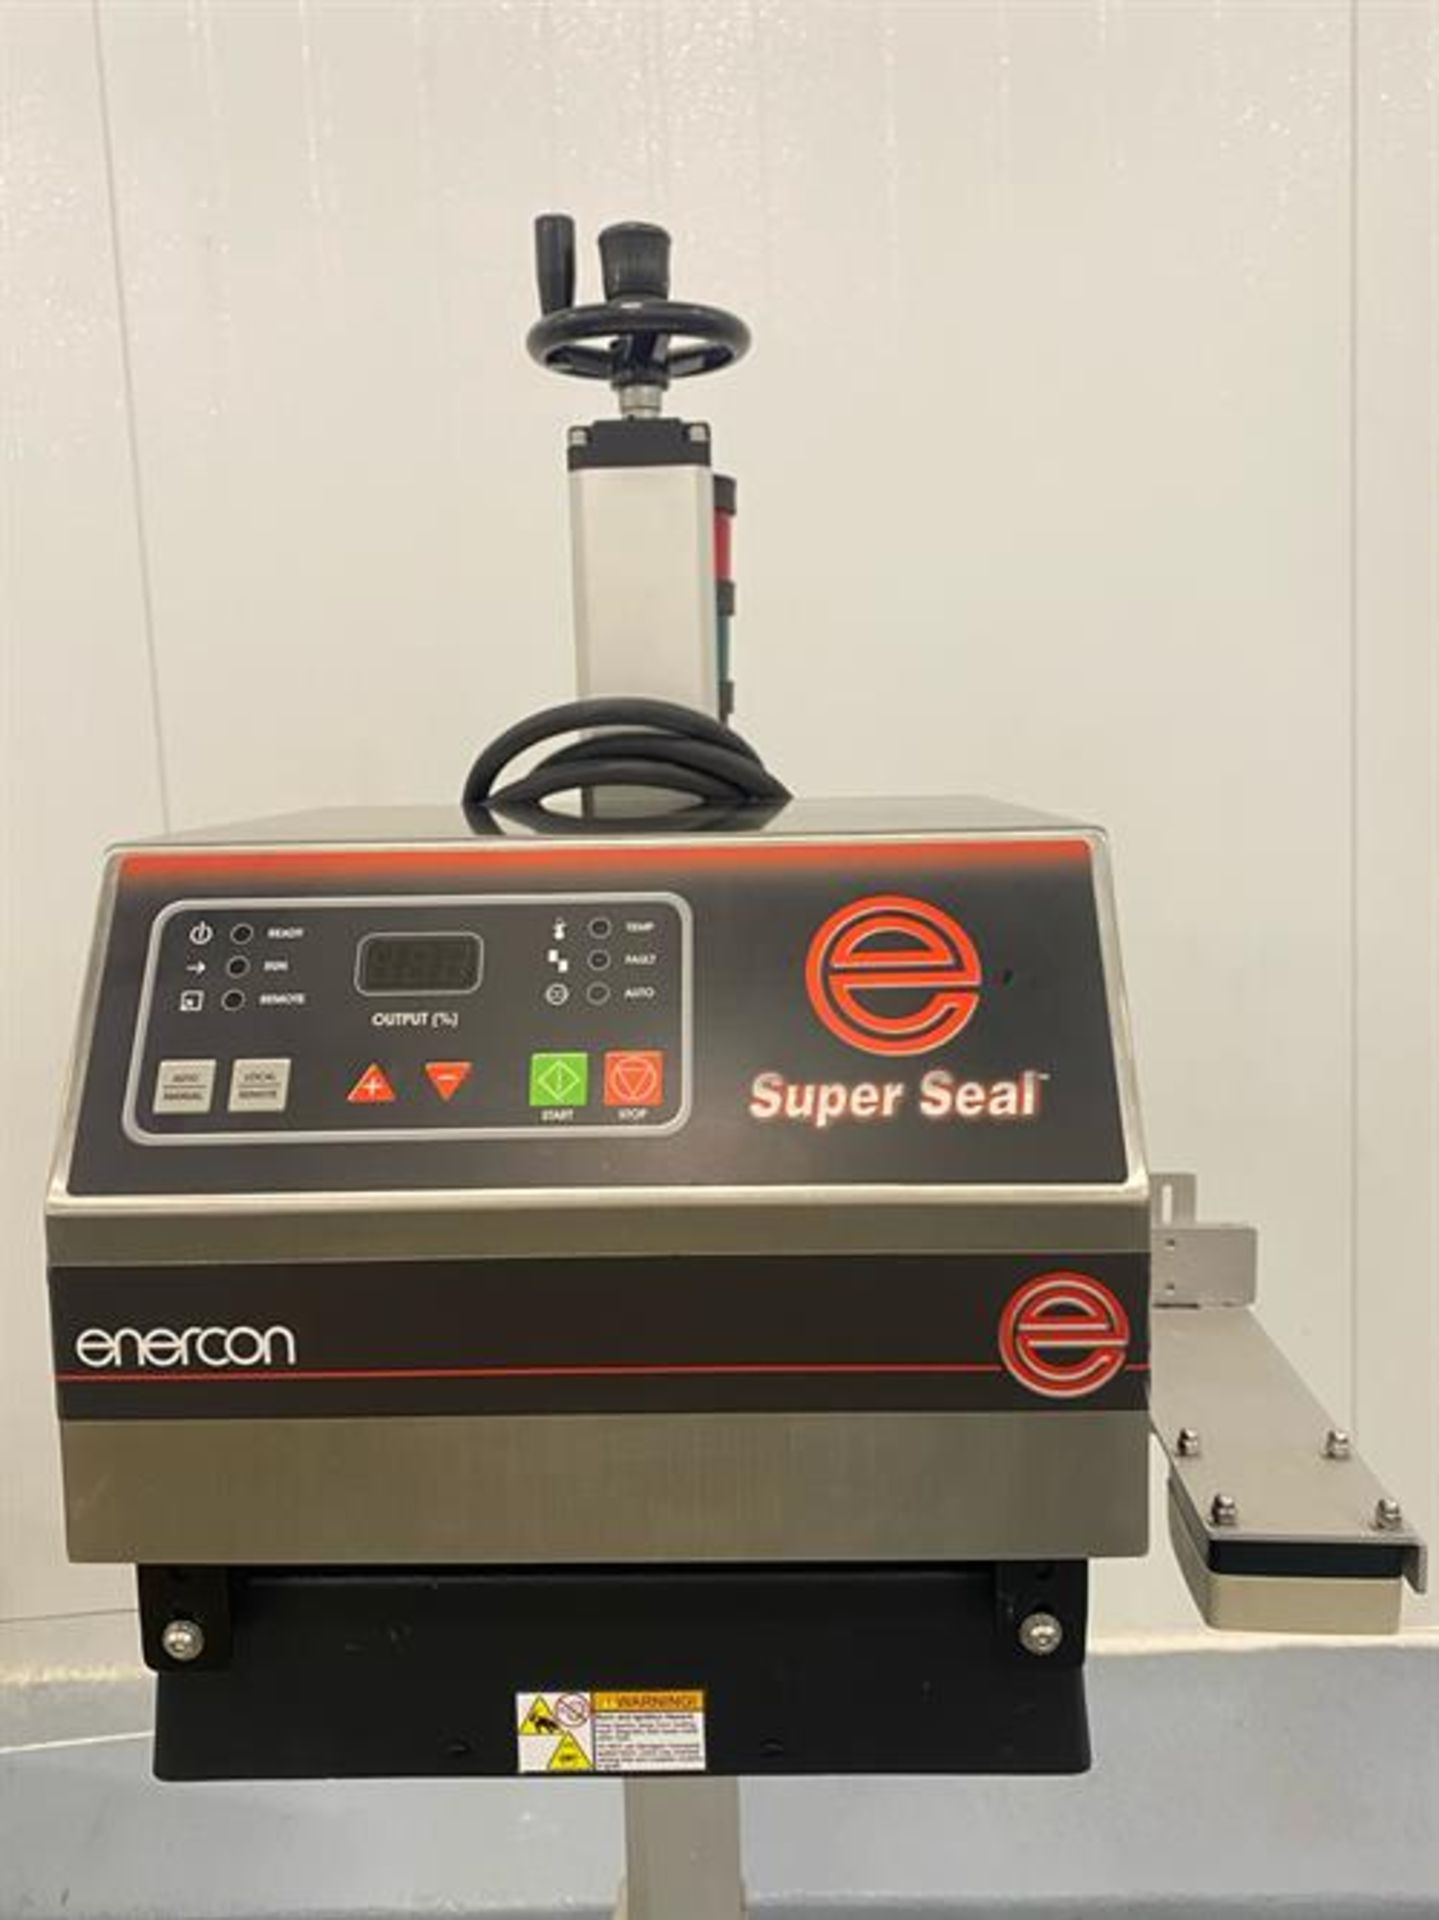 Enercon Super Seal 75 Induction Sealer - Model LM5022-295 - Sealing range: 53 - 120 mm - Serial - Image 4 of 11